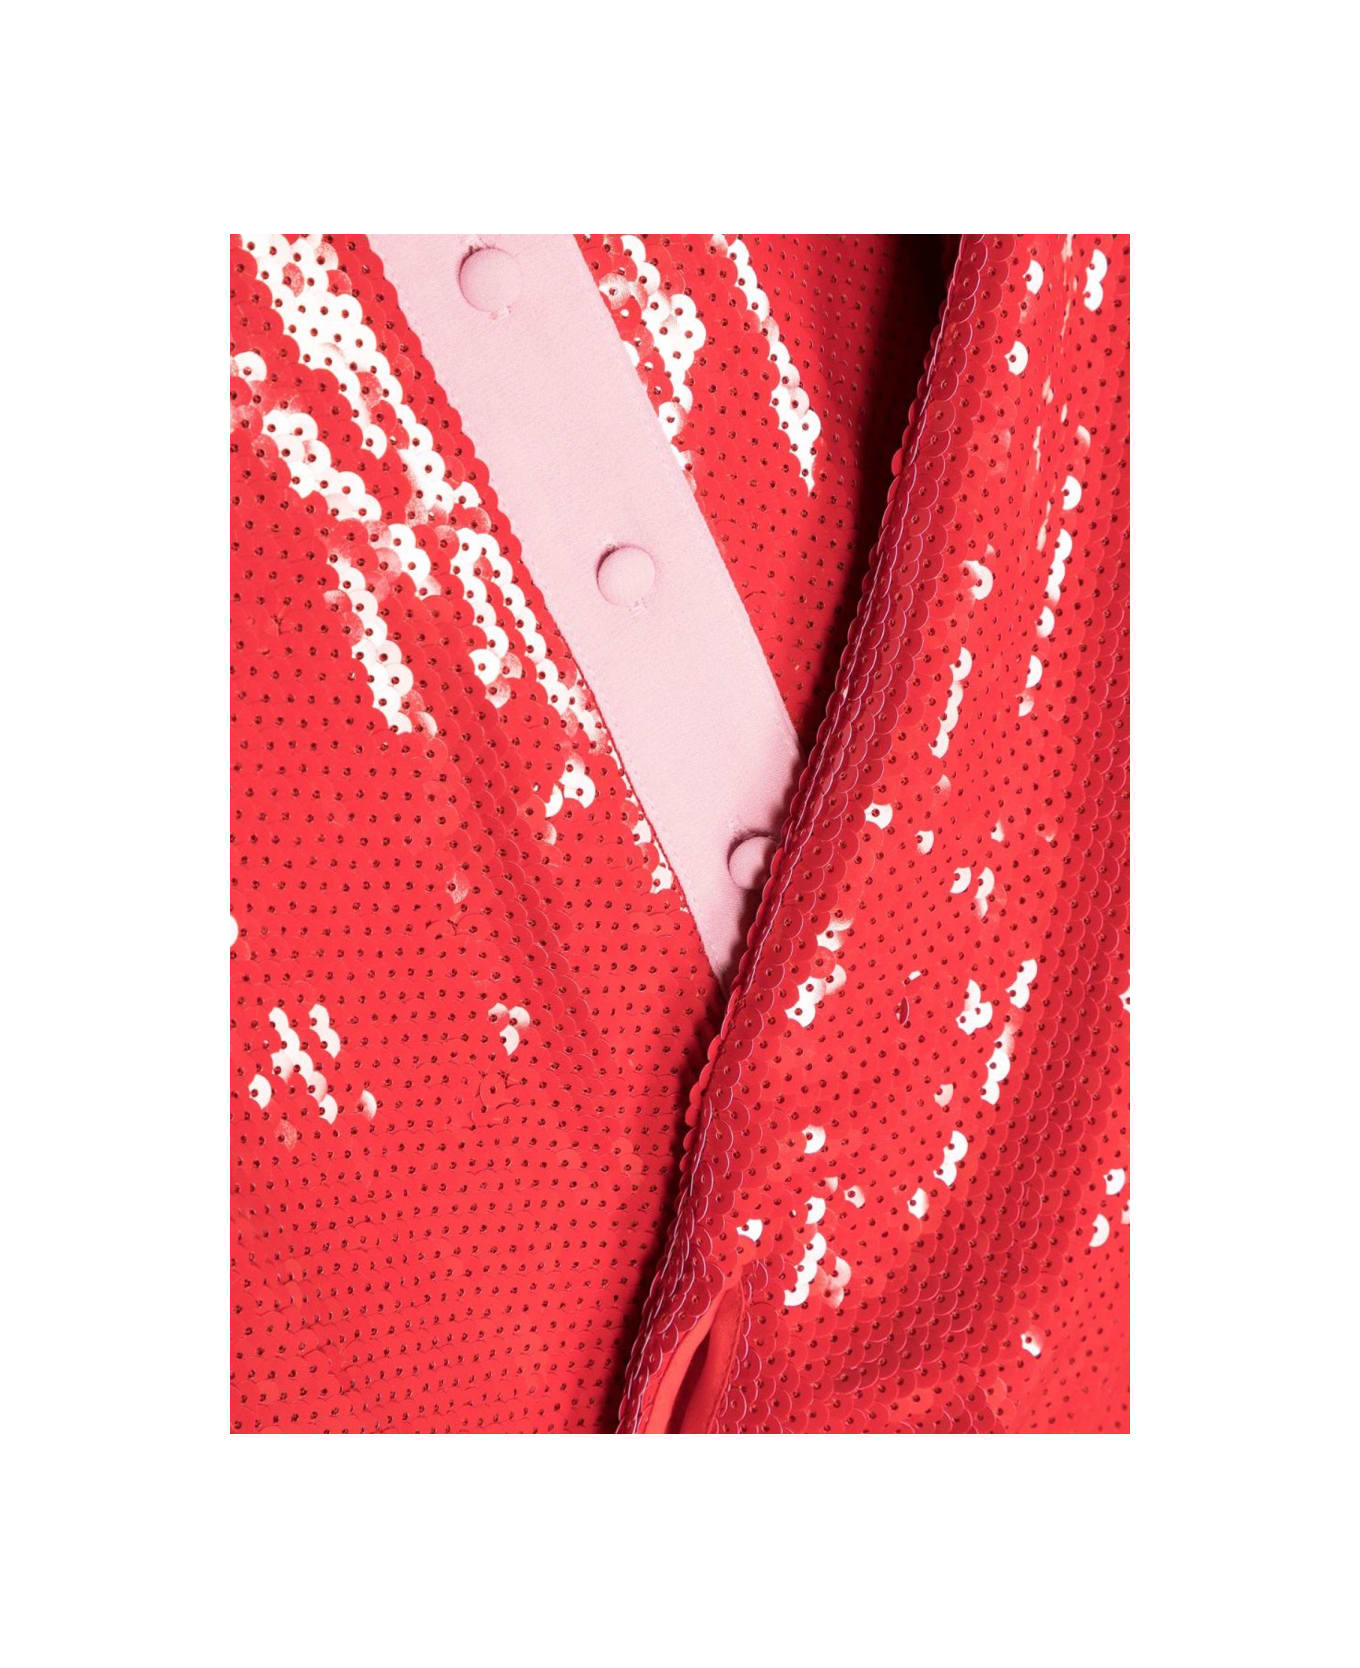 N.21 Ml Dress Shirt Collar - RED ワンピース＆ドレス